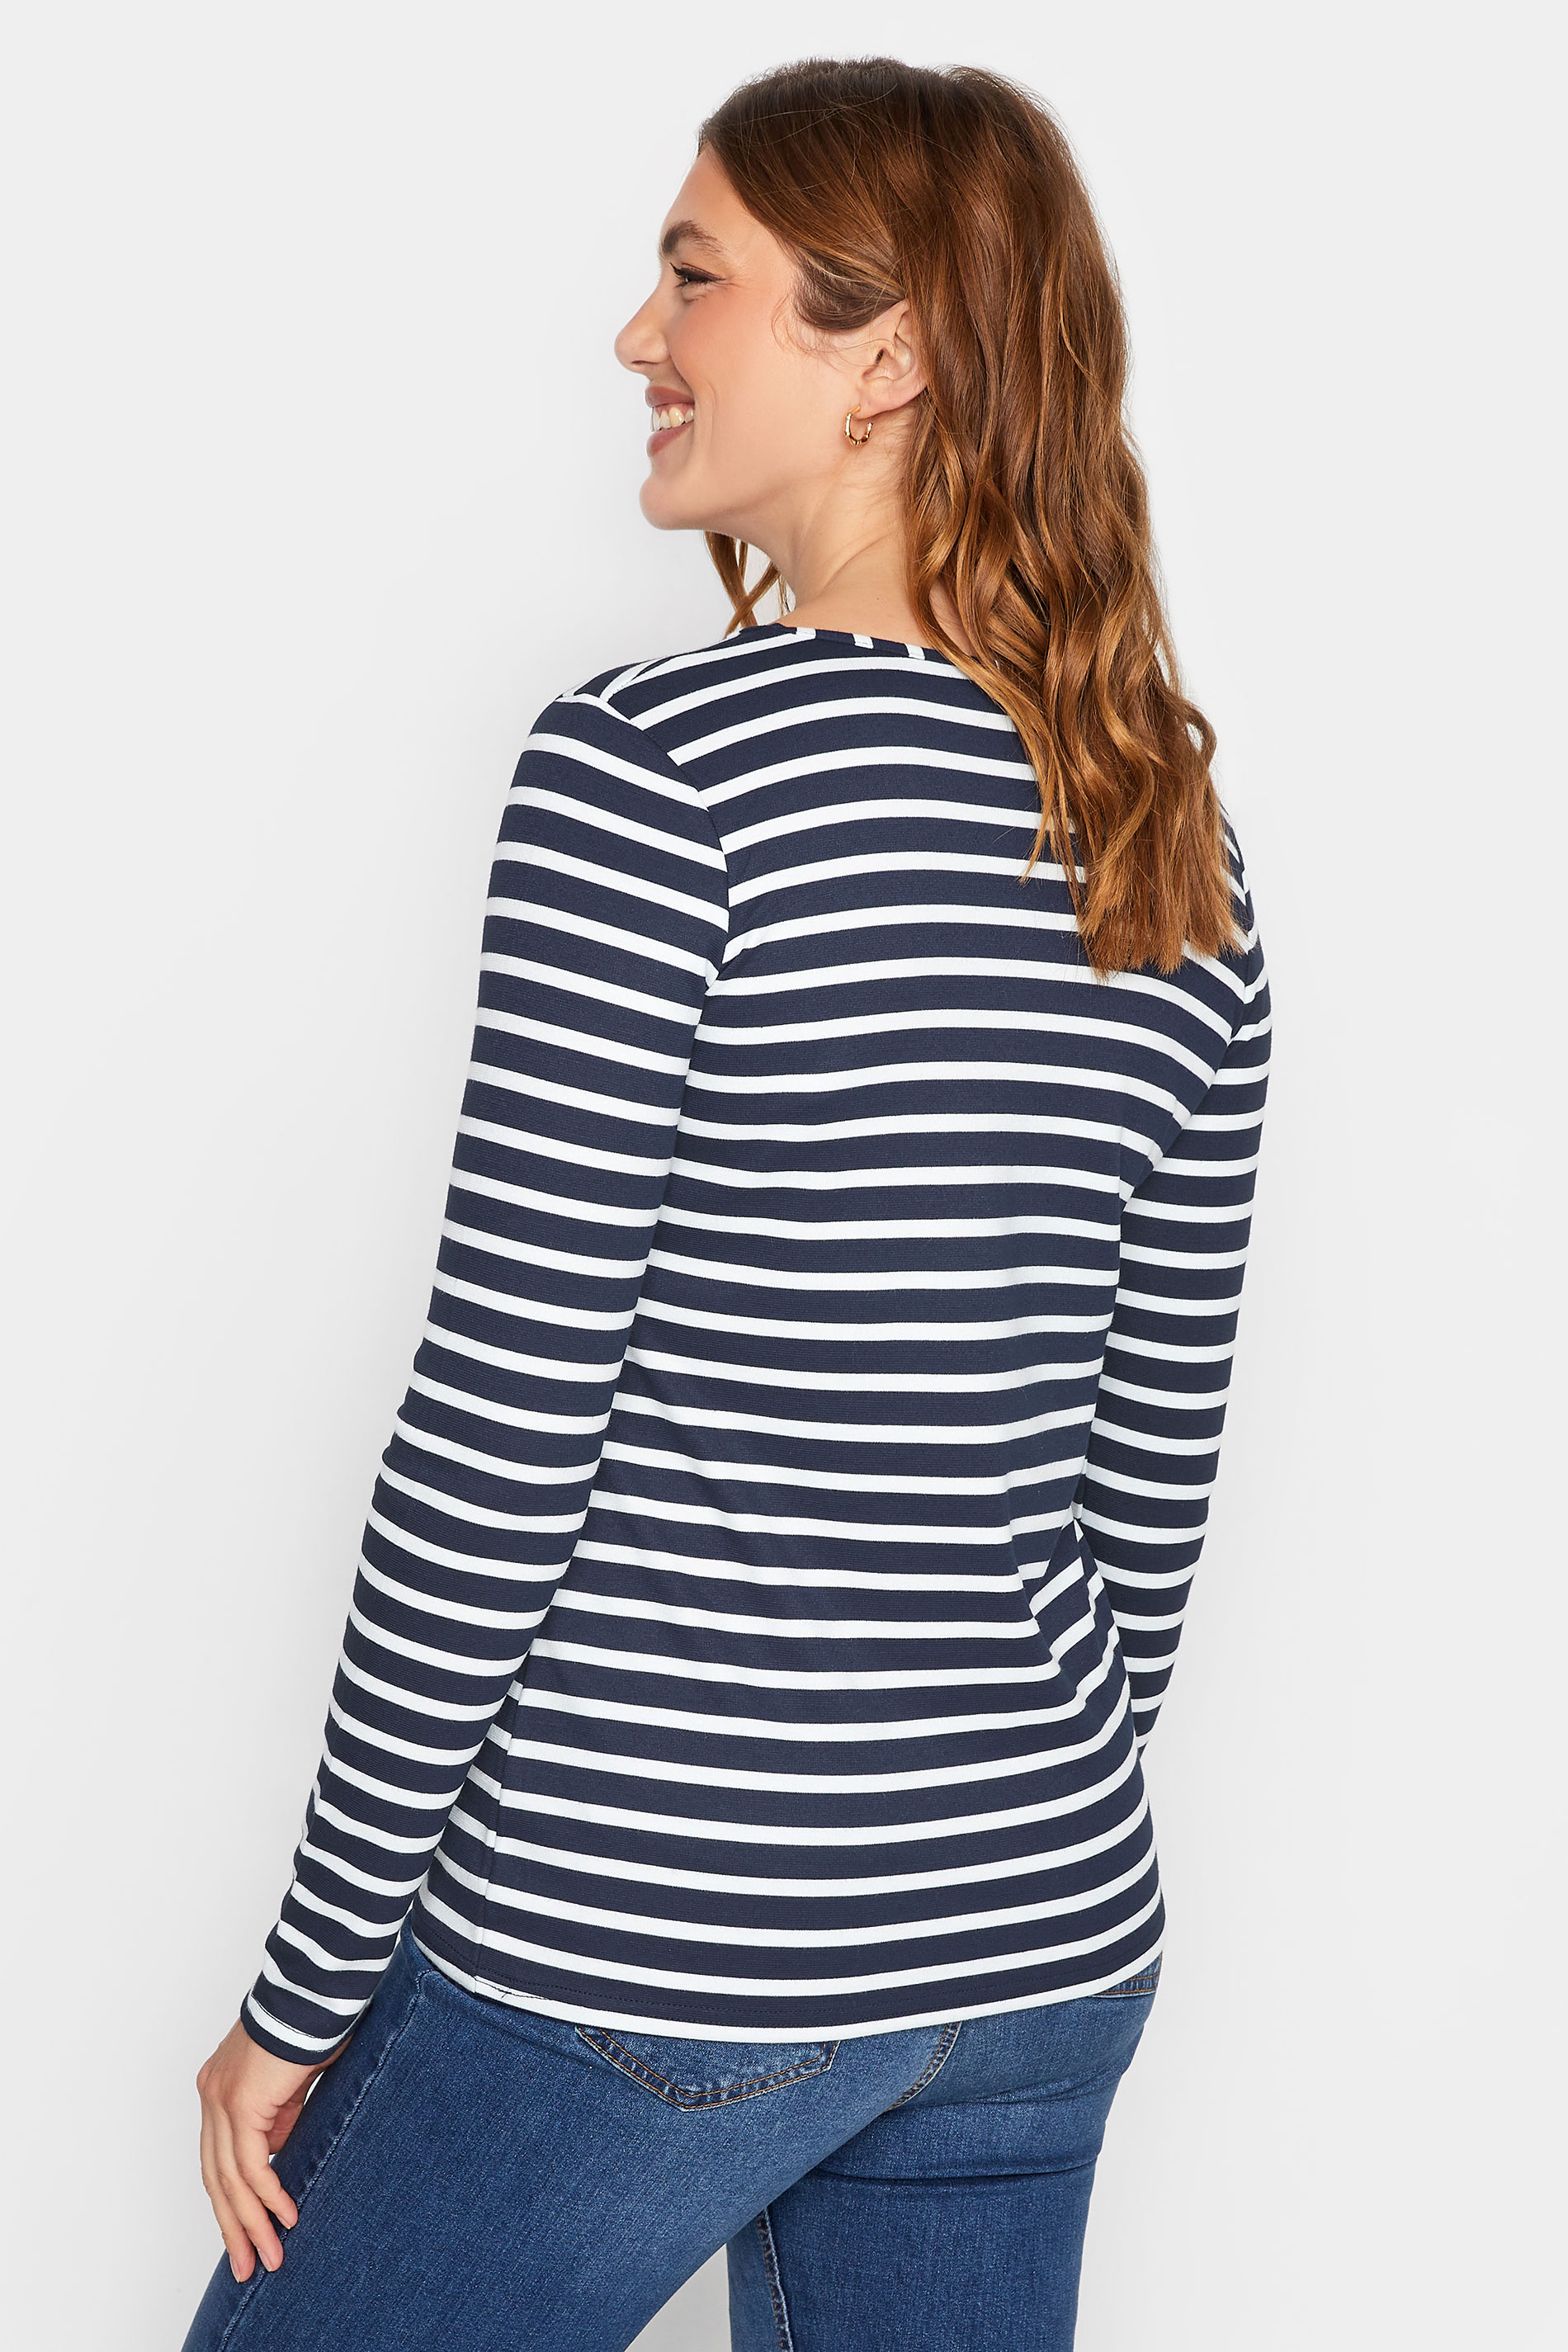 LTS Tall Navy Blue Stripe Long Sleeve Top | Long Tall Sally 3